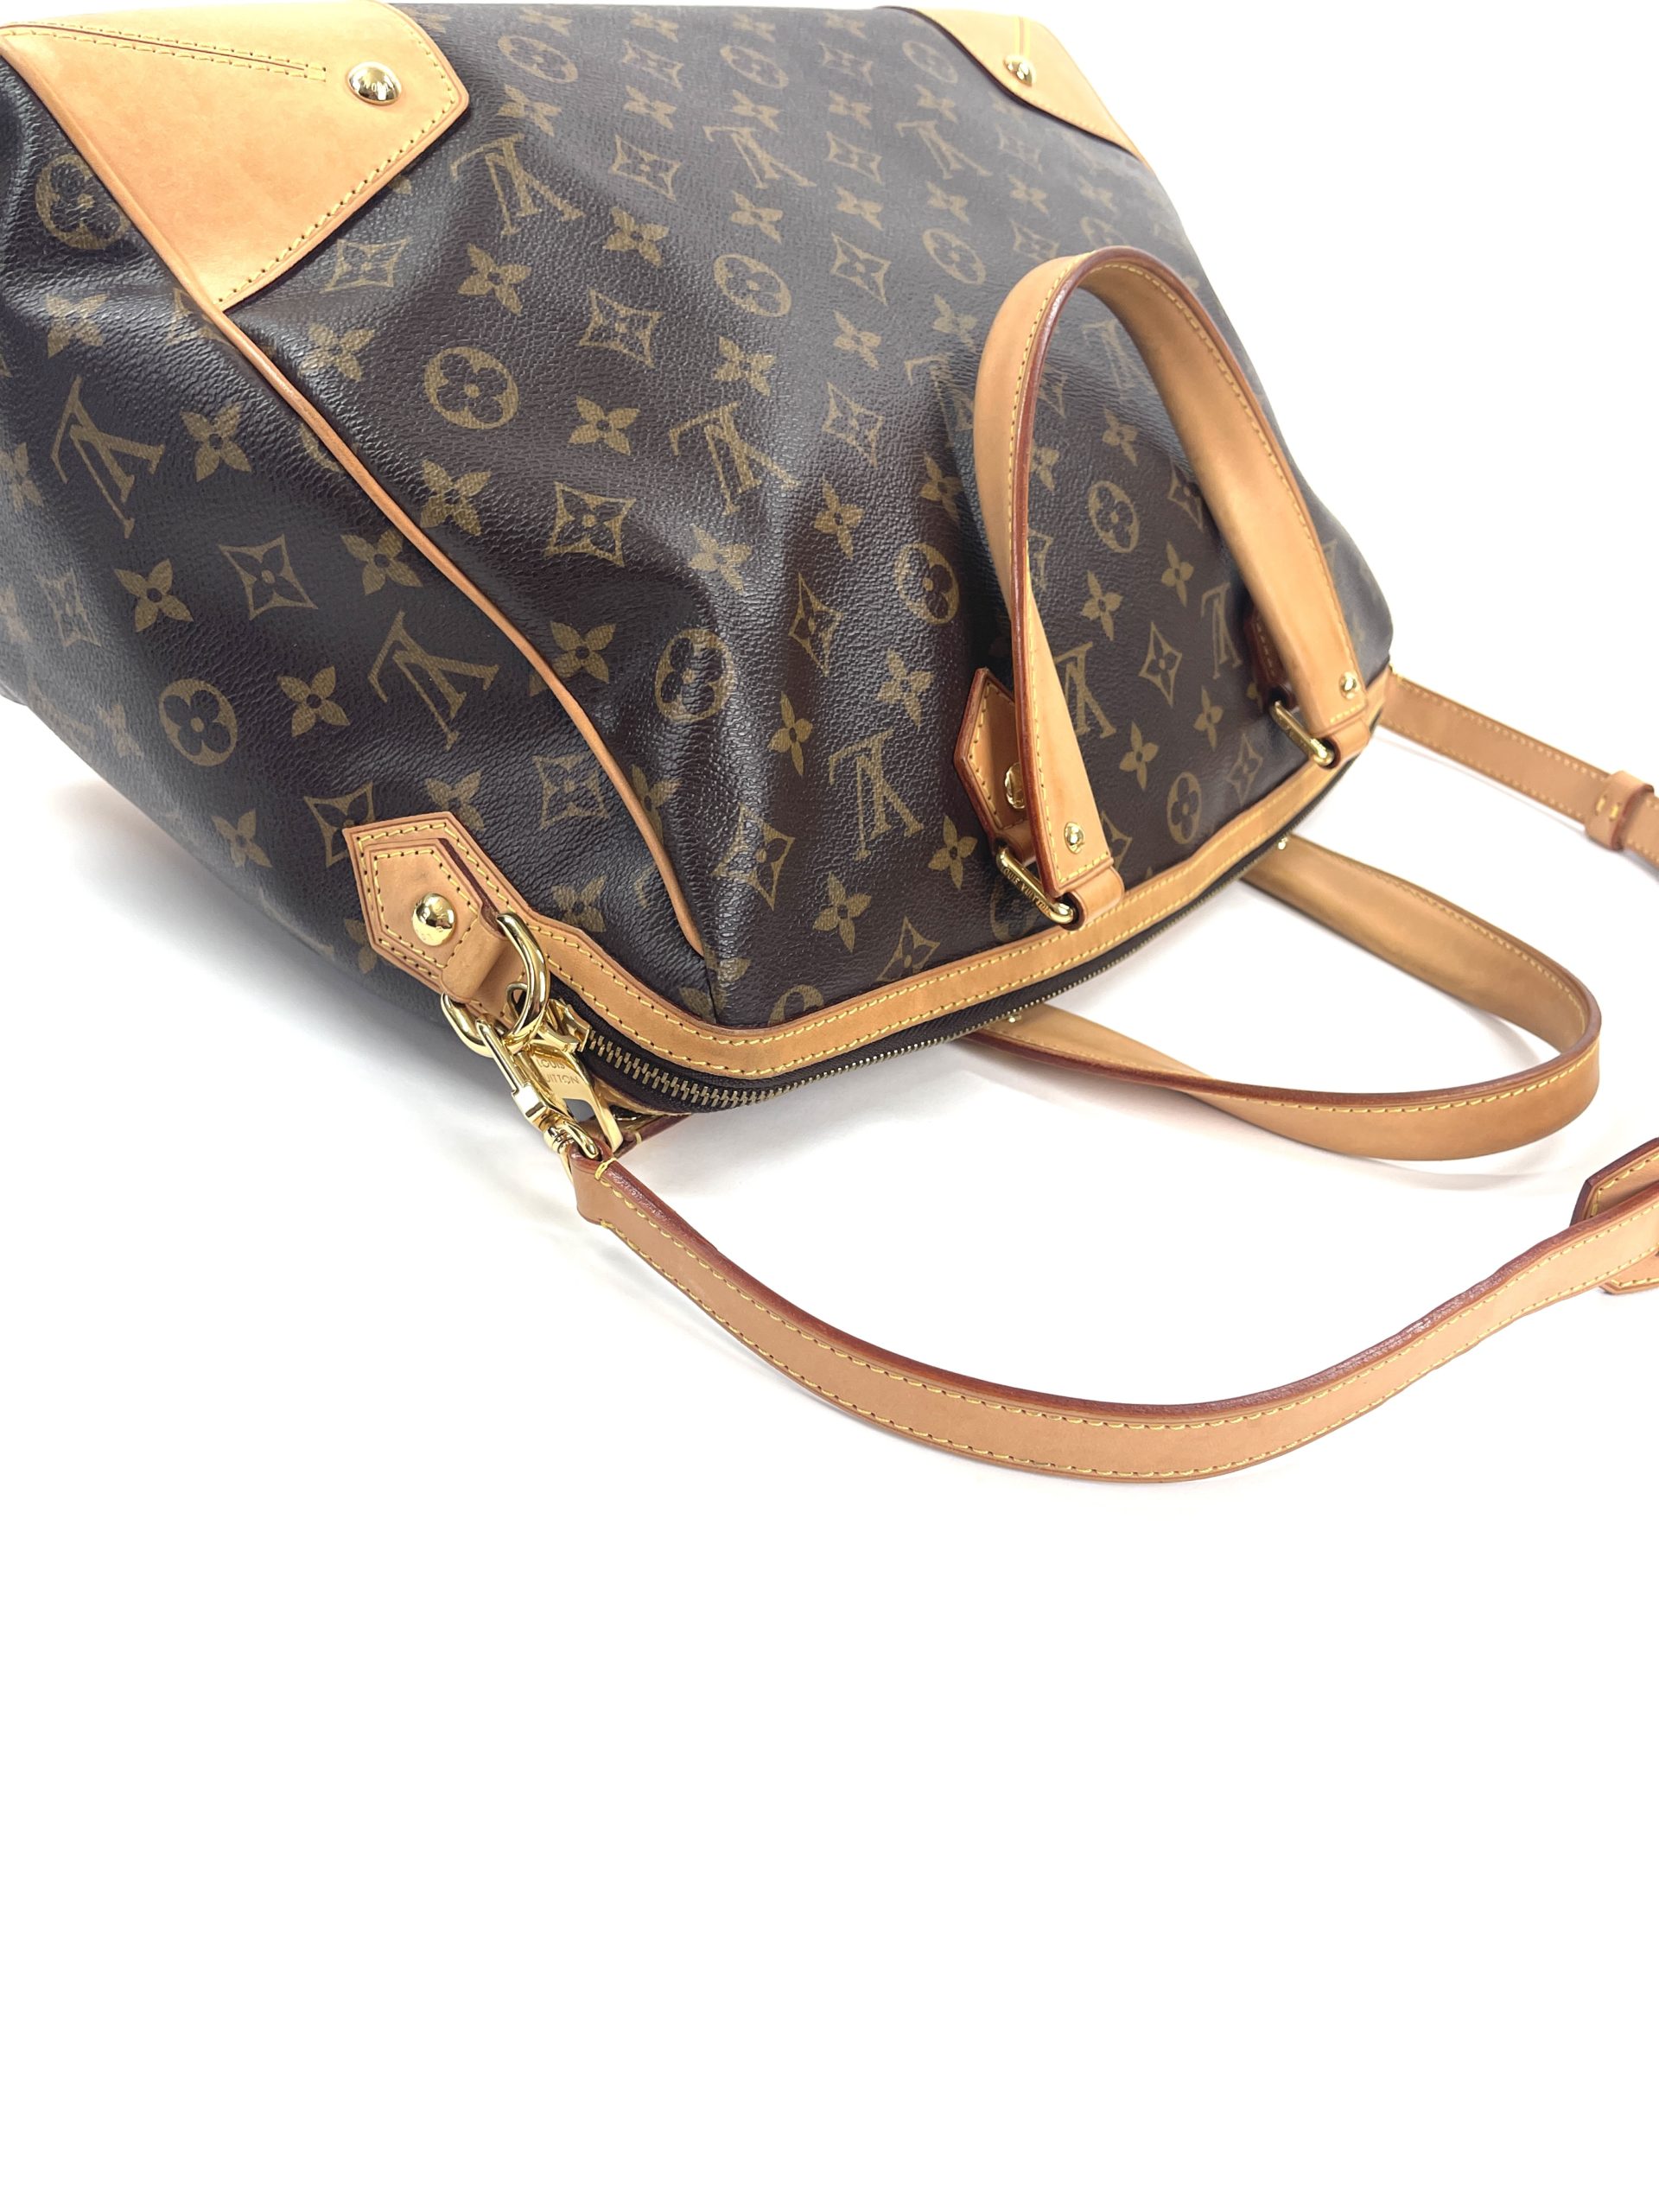 Auth Used Louis Vuitton Retiro Gm Monogram shoulder handbag unae